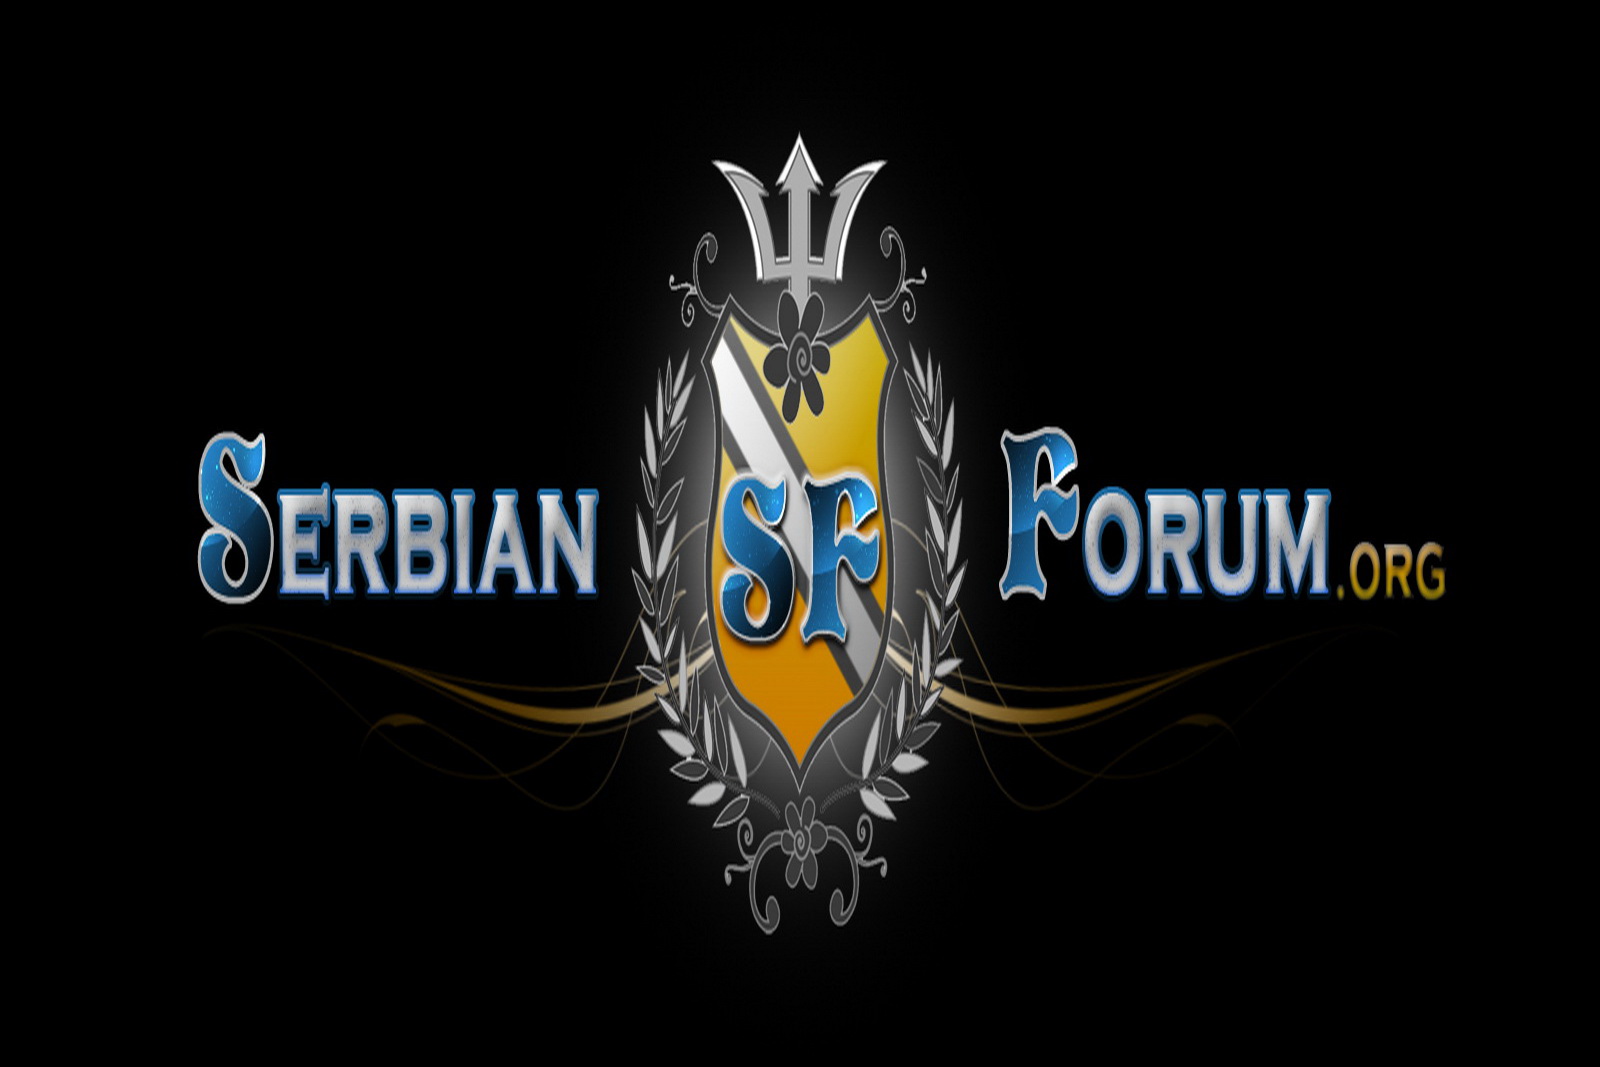 Fast-games forum.hr švedska chat site www.forum.hr